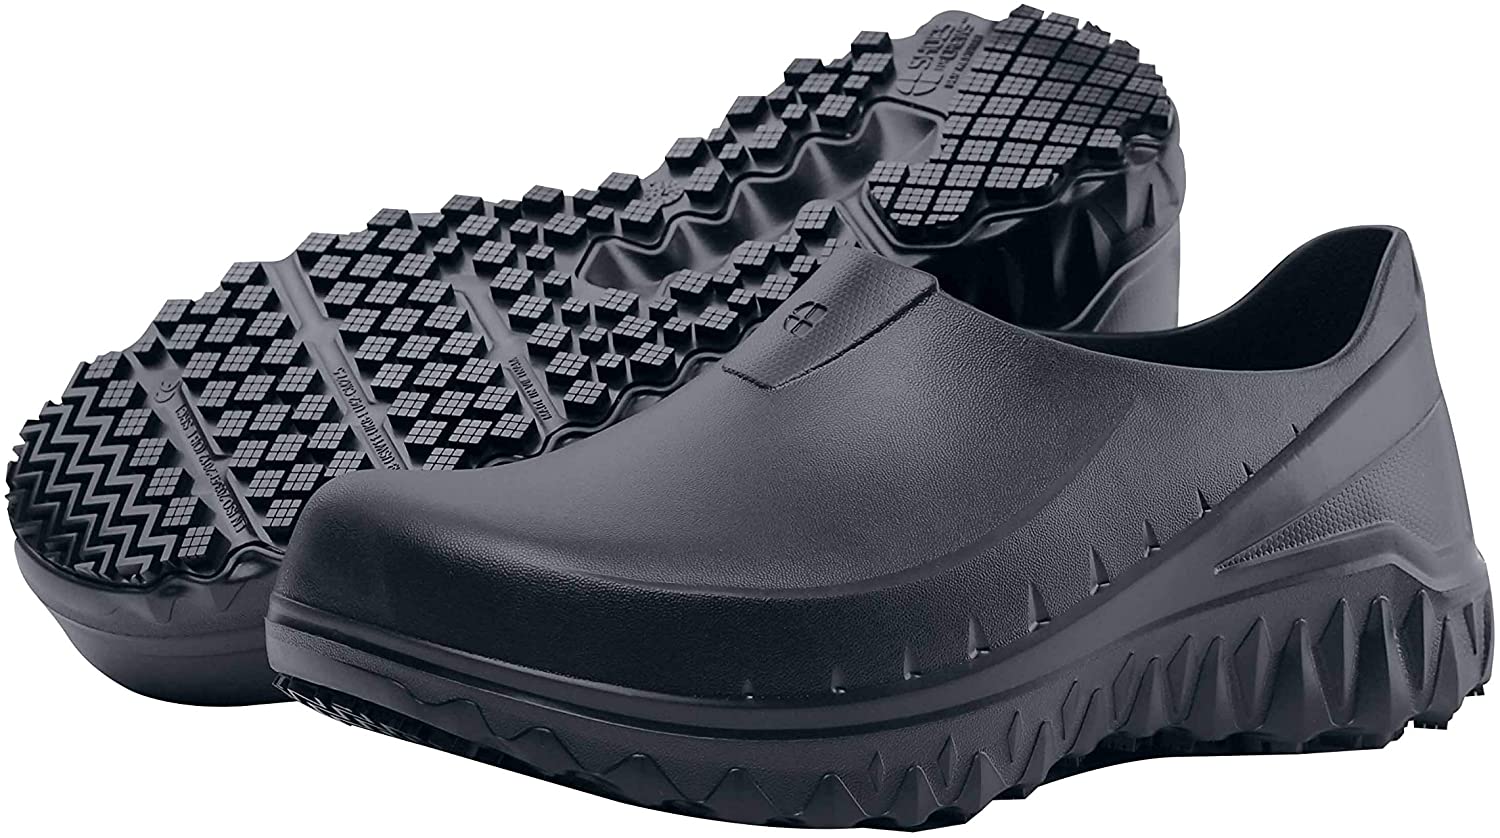 Men's Bloodstone Slip Resistant Slip-On Shoes - Soft Toe - Black Size 15(M)